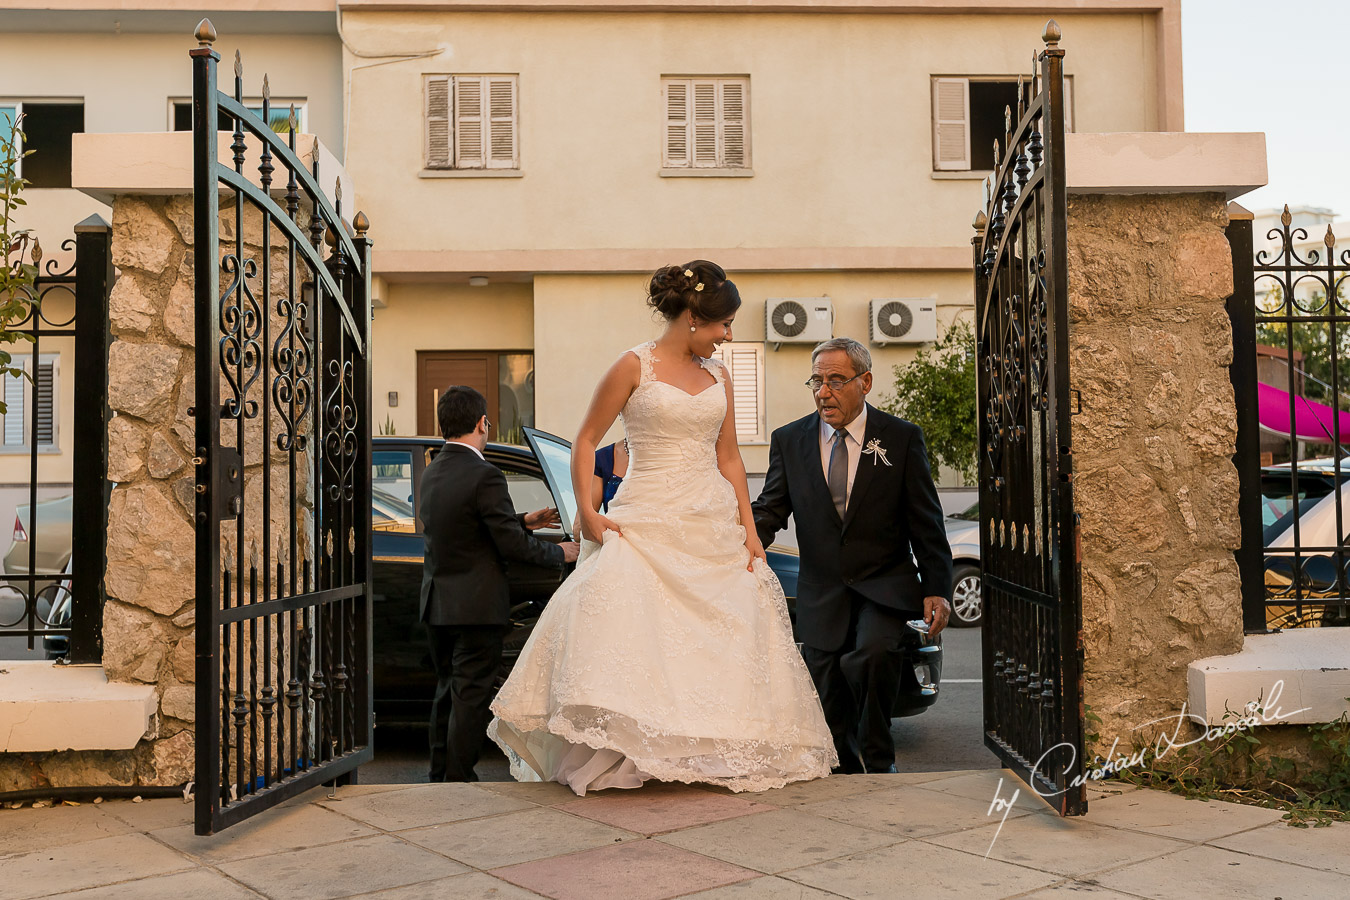 Beautiful Wedding Photography in Nicosia - Yiannis & Rodoula 19